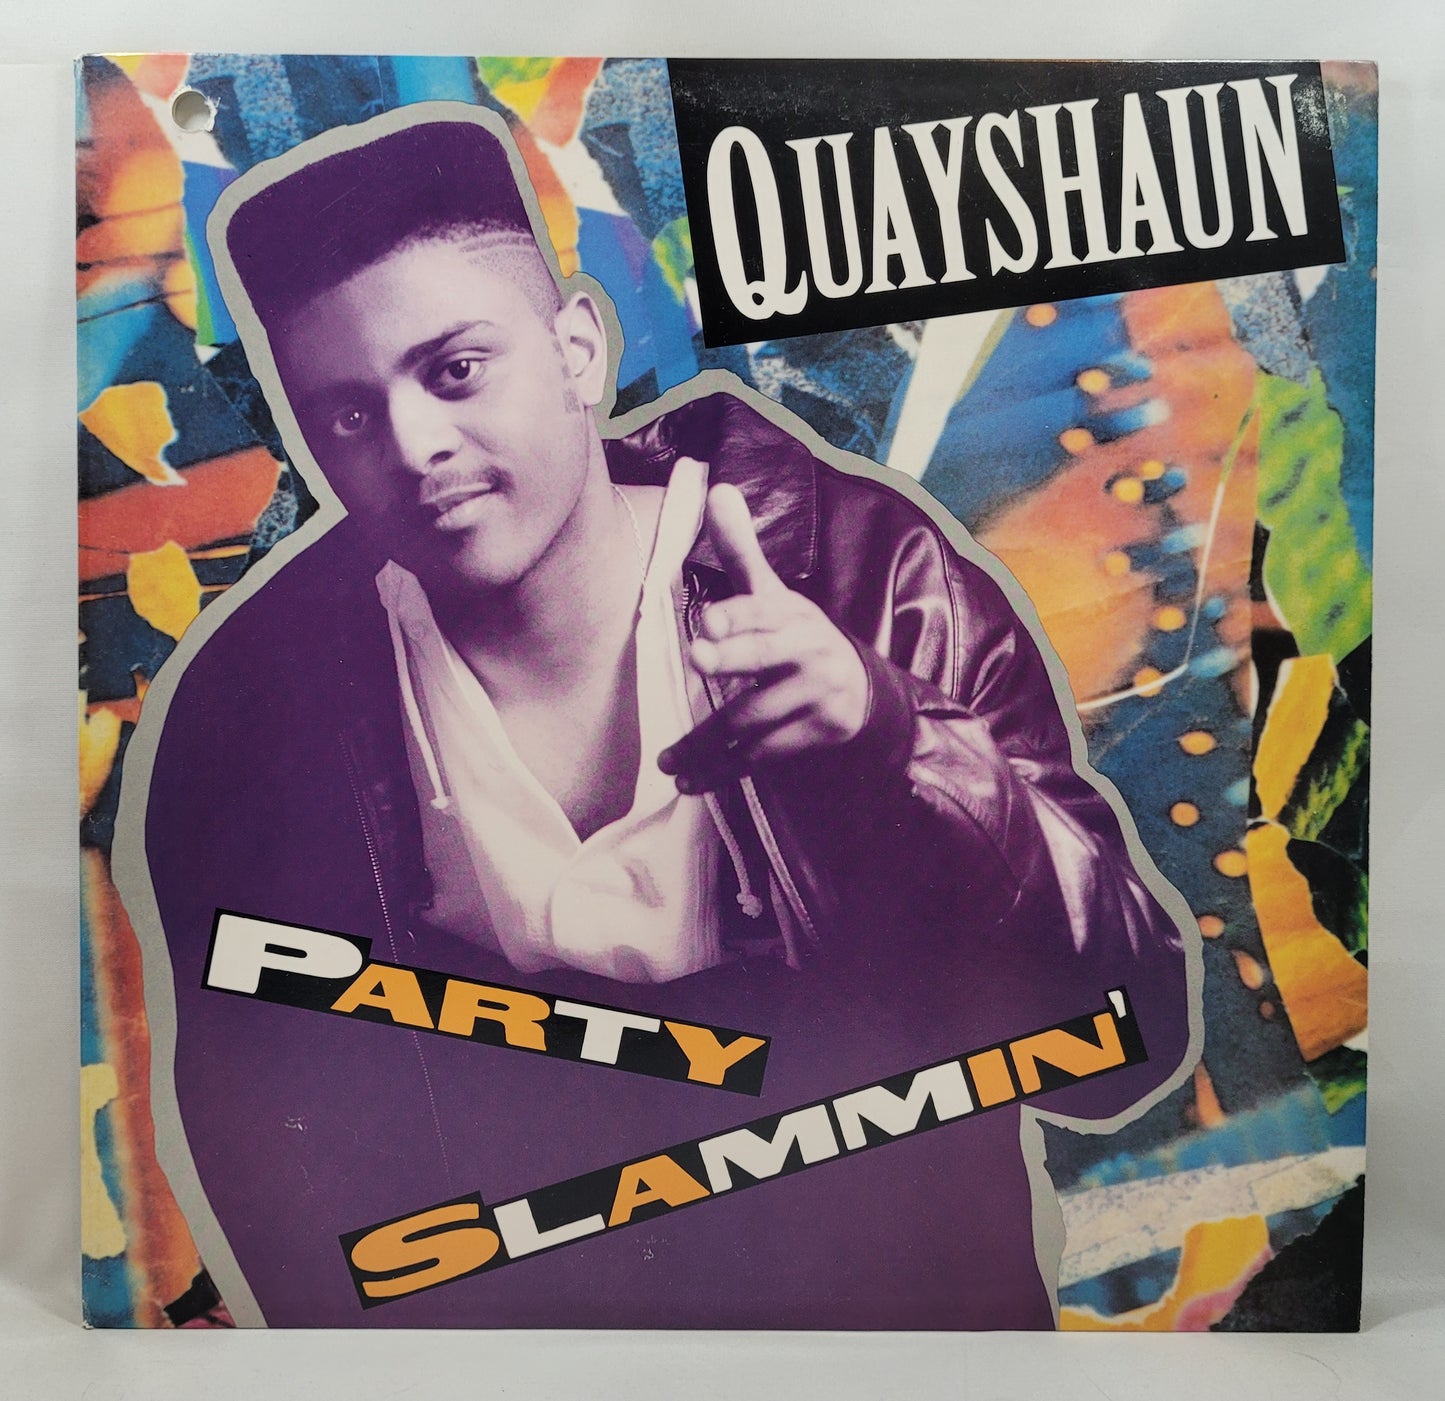 Quayshaun - Party Slammin' [1991 Used Vinyl Record 12" Single]